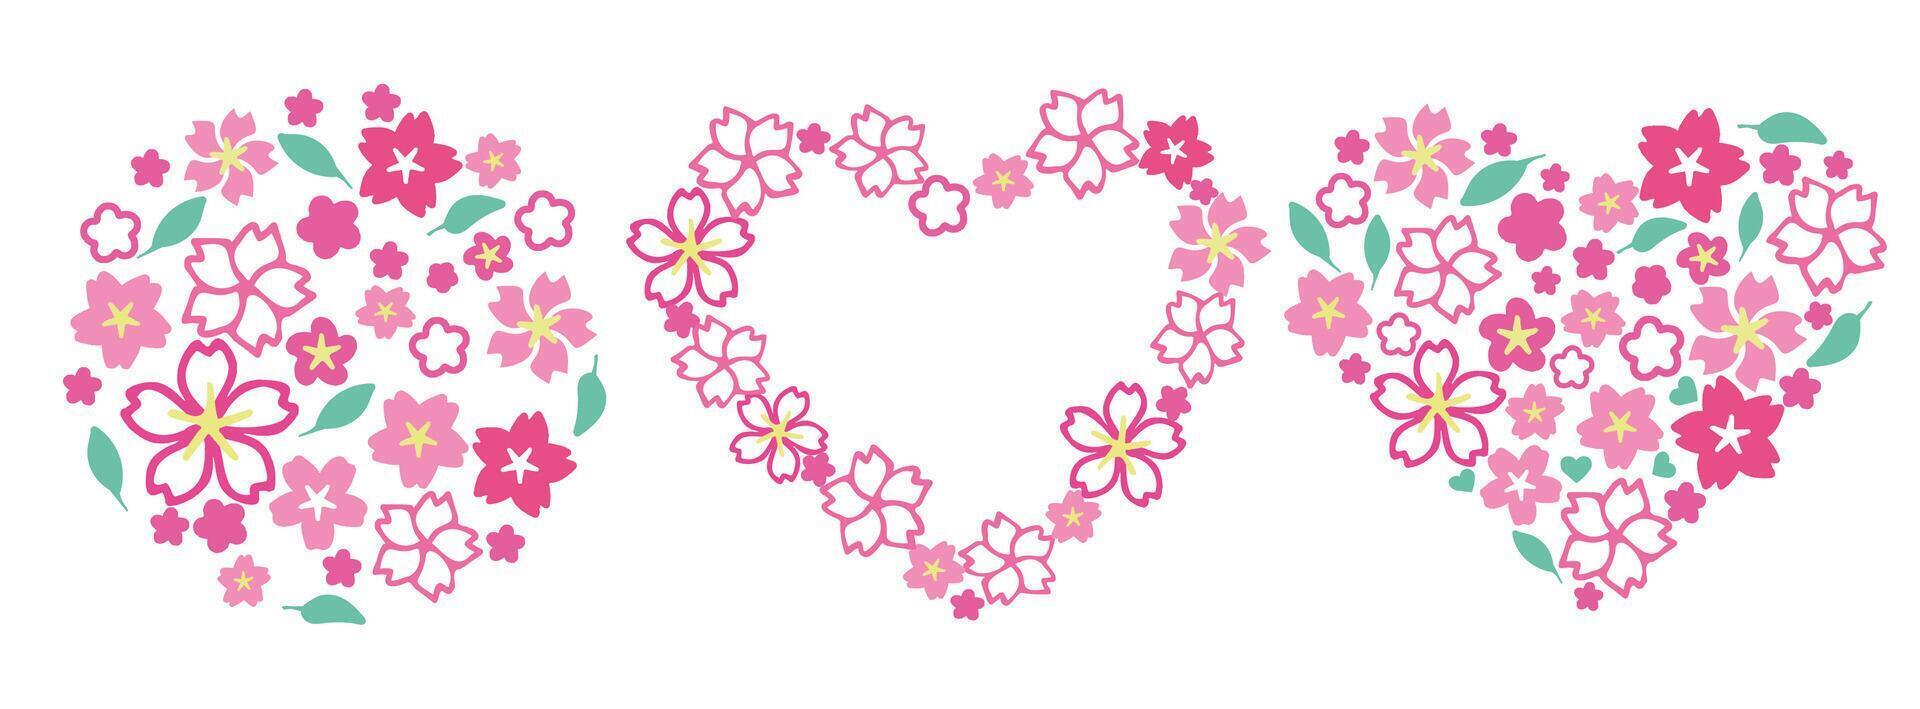 sakura flor composición para tarjeta o invitar.primavera diseño vector